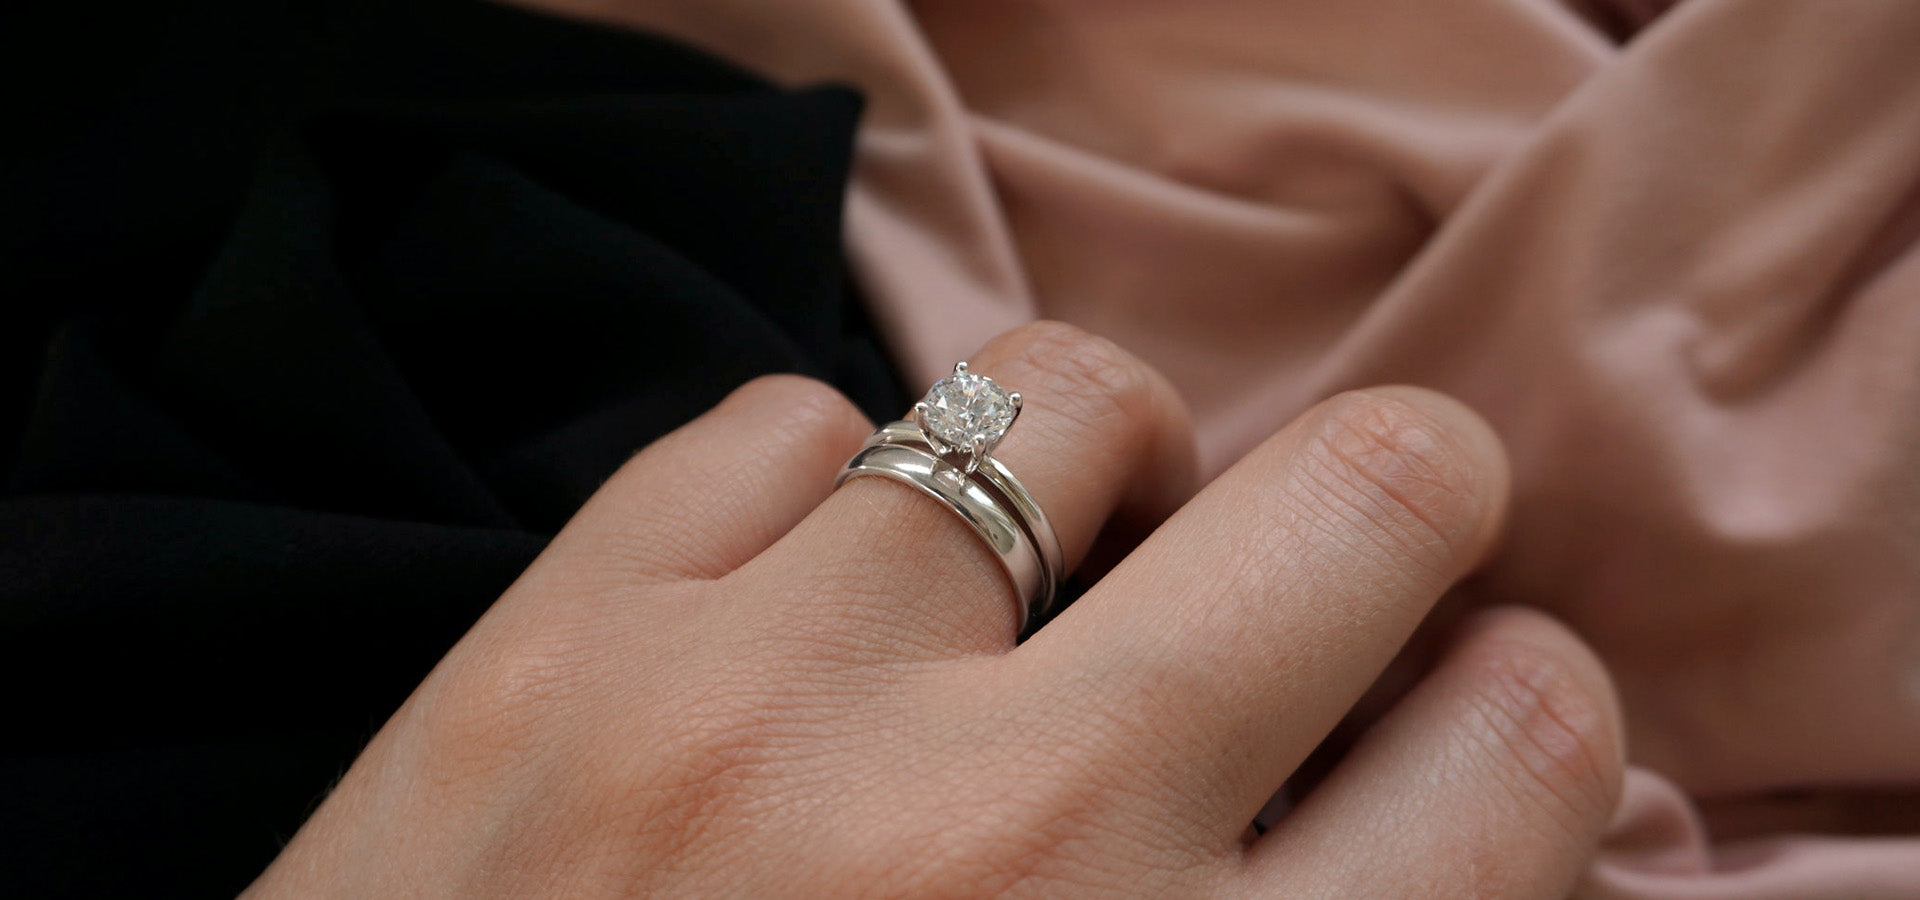 Round brilliant solitaire diamond engagement ring